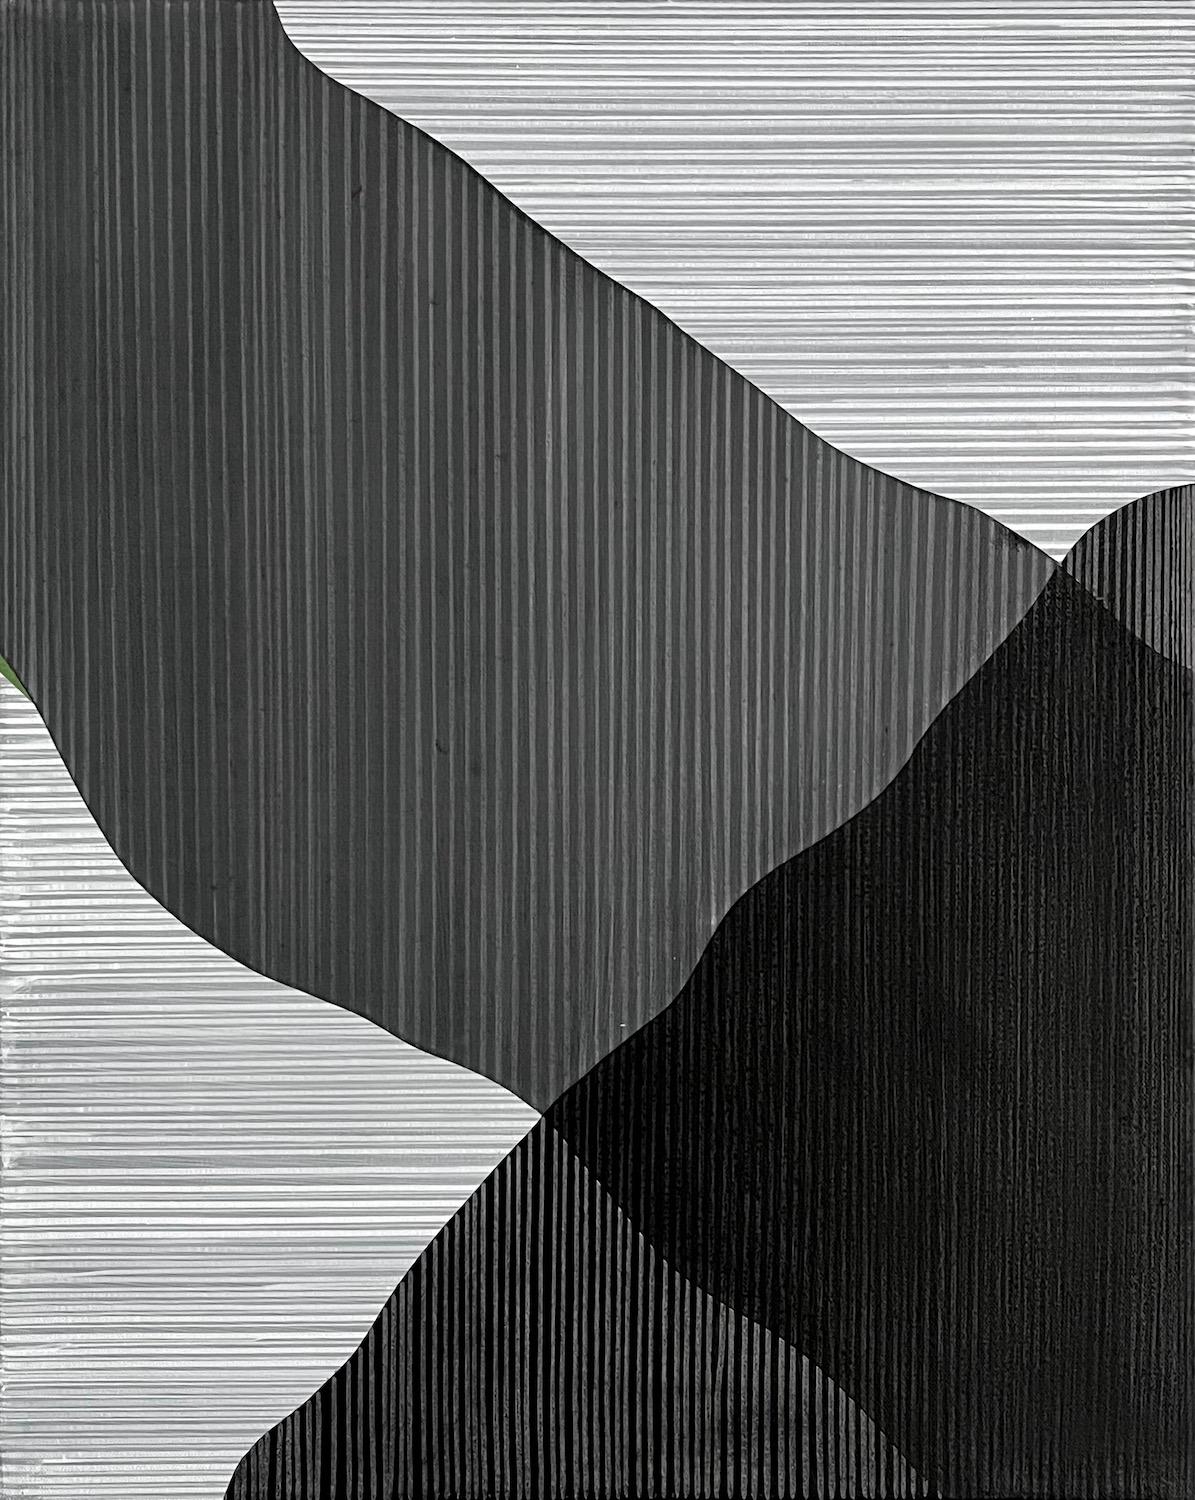 Abstract Painting Patrick Duffy - Tissu déformé, peinture abstraite